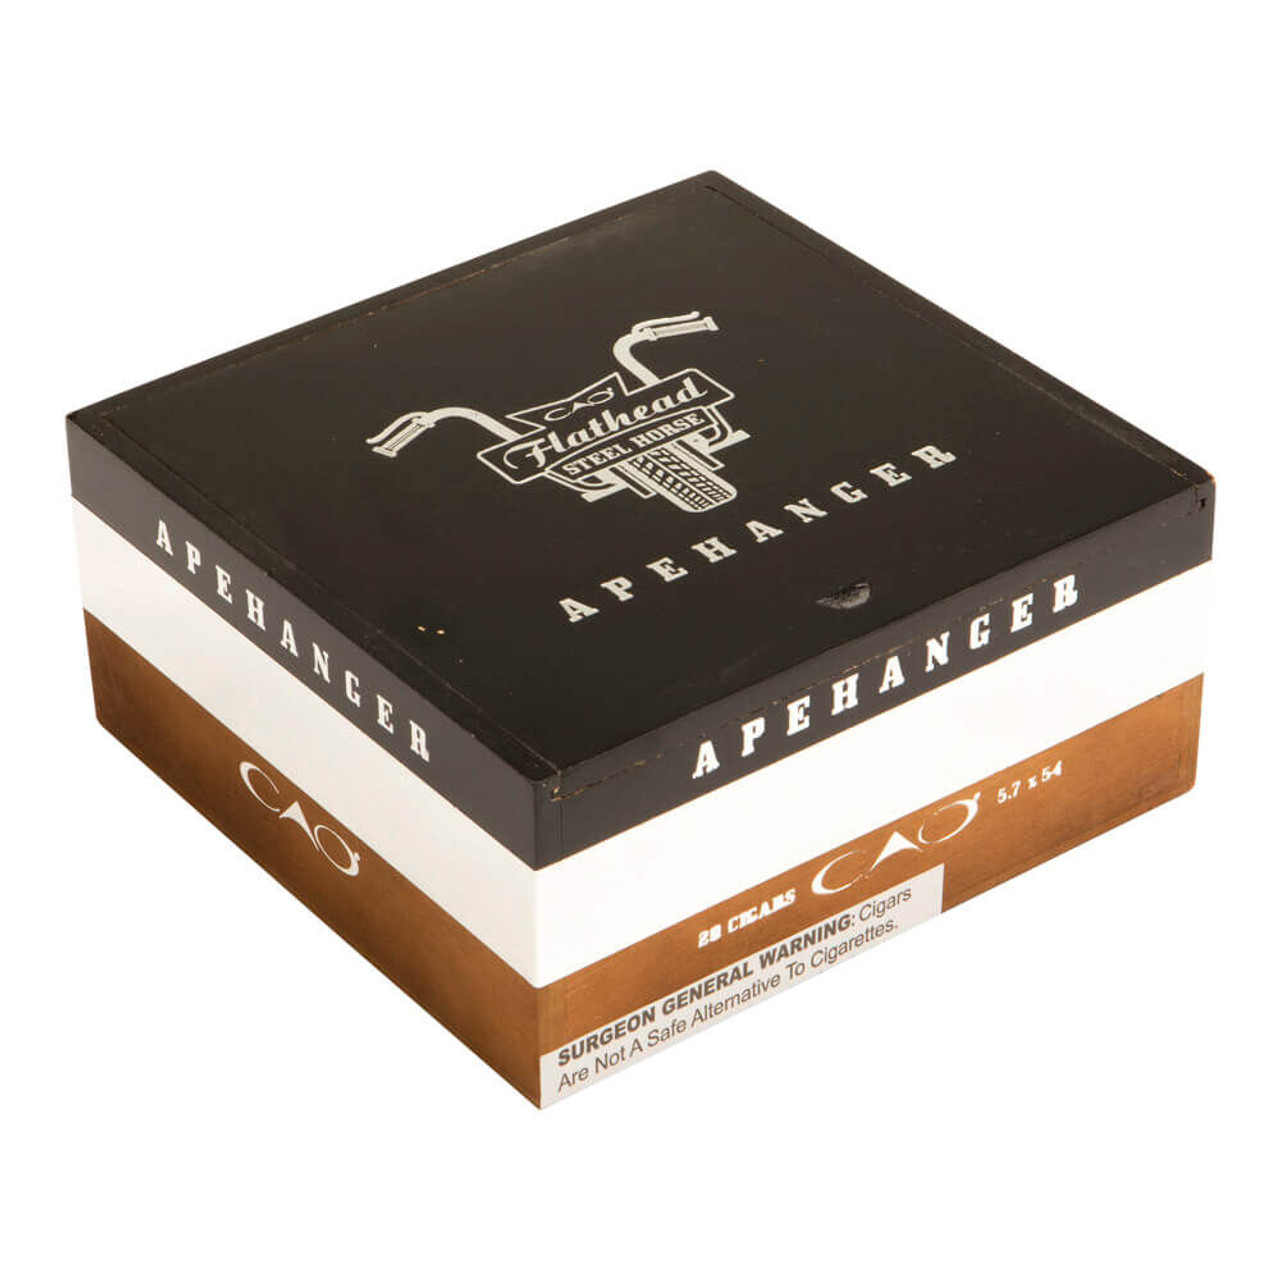 CAO Flathead Steel Horse Apehanger Cigars - 5.5 x 58 (Box of 20)